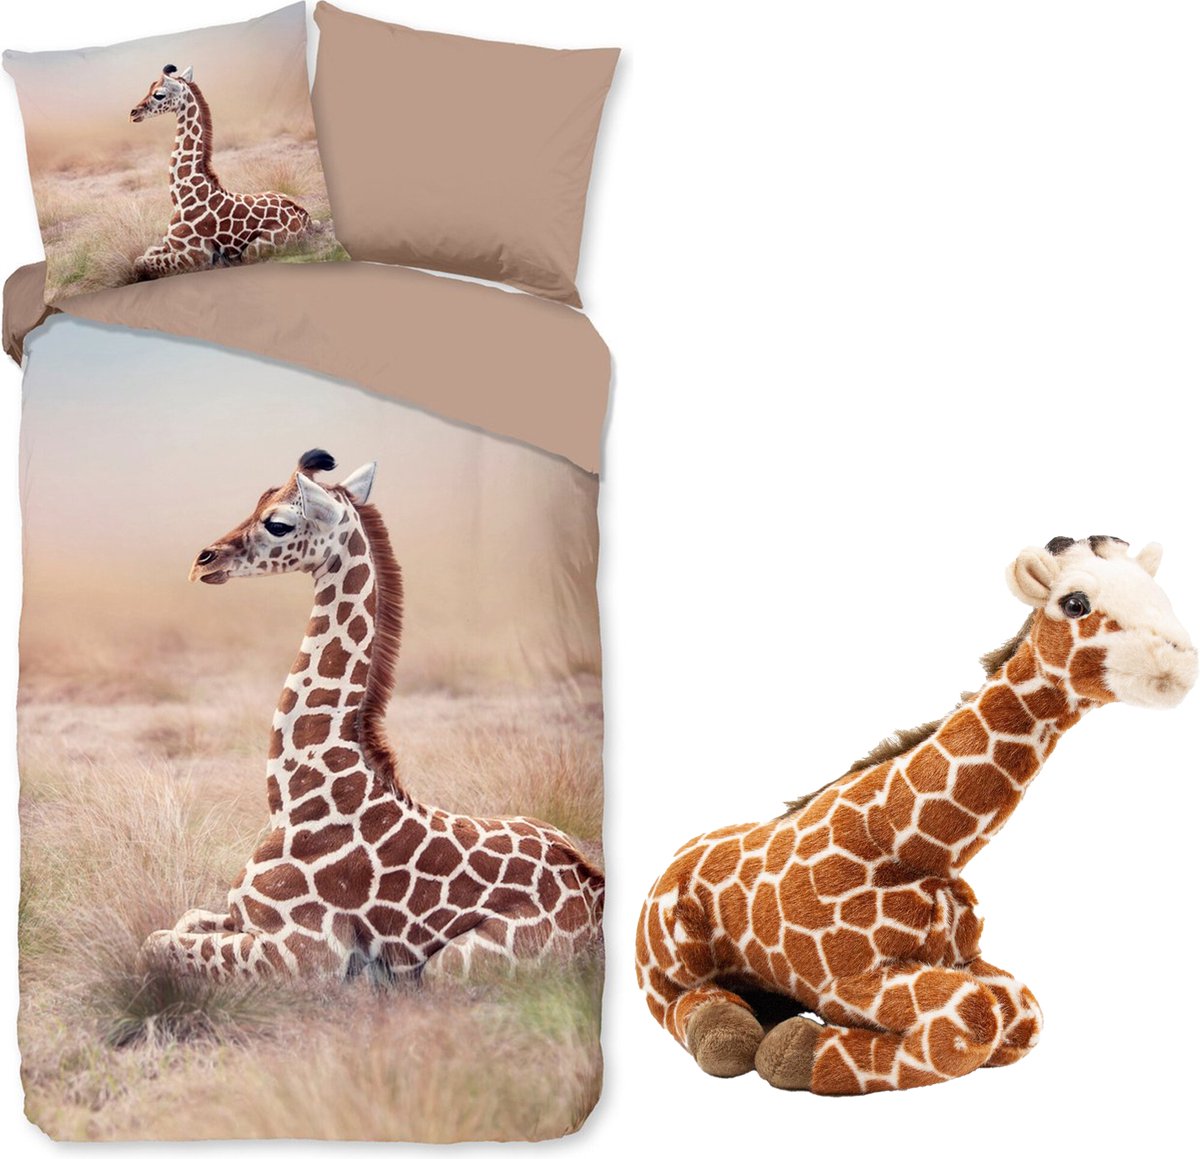 Dekbedovertrek Giraffe- Beige bruin- Afrika- 140x200/220- Katoen- incl. pluche Giraffe knuffel 35 cm hoog!